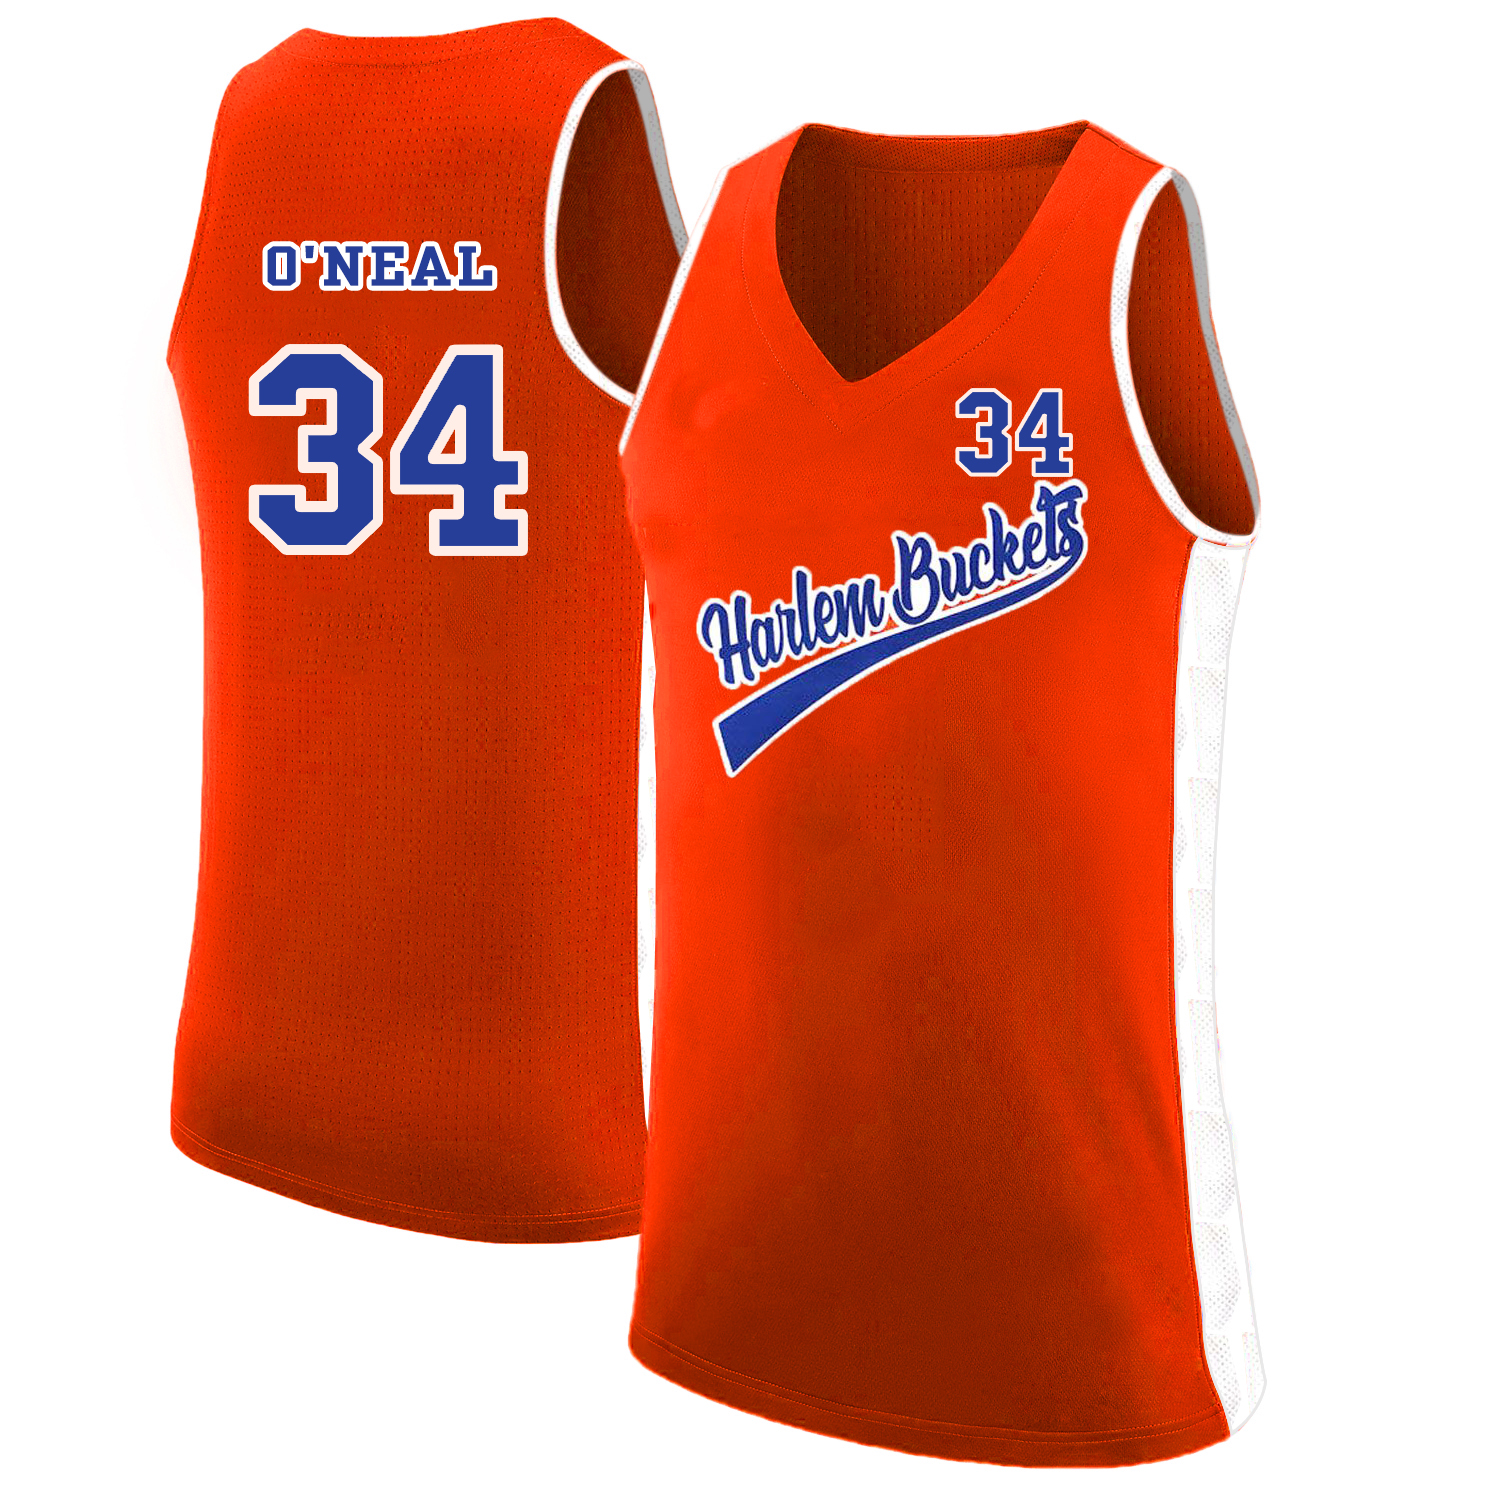 Harlem Buckets 34 Shaquille O'Neal Orange Uncle Drew Basketball Jersey